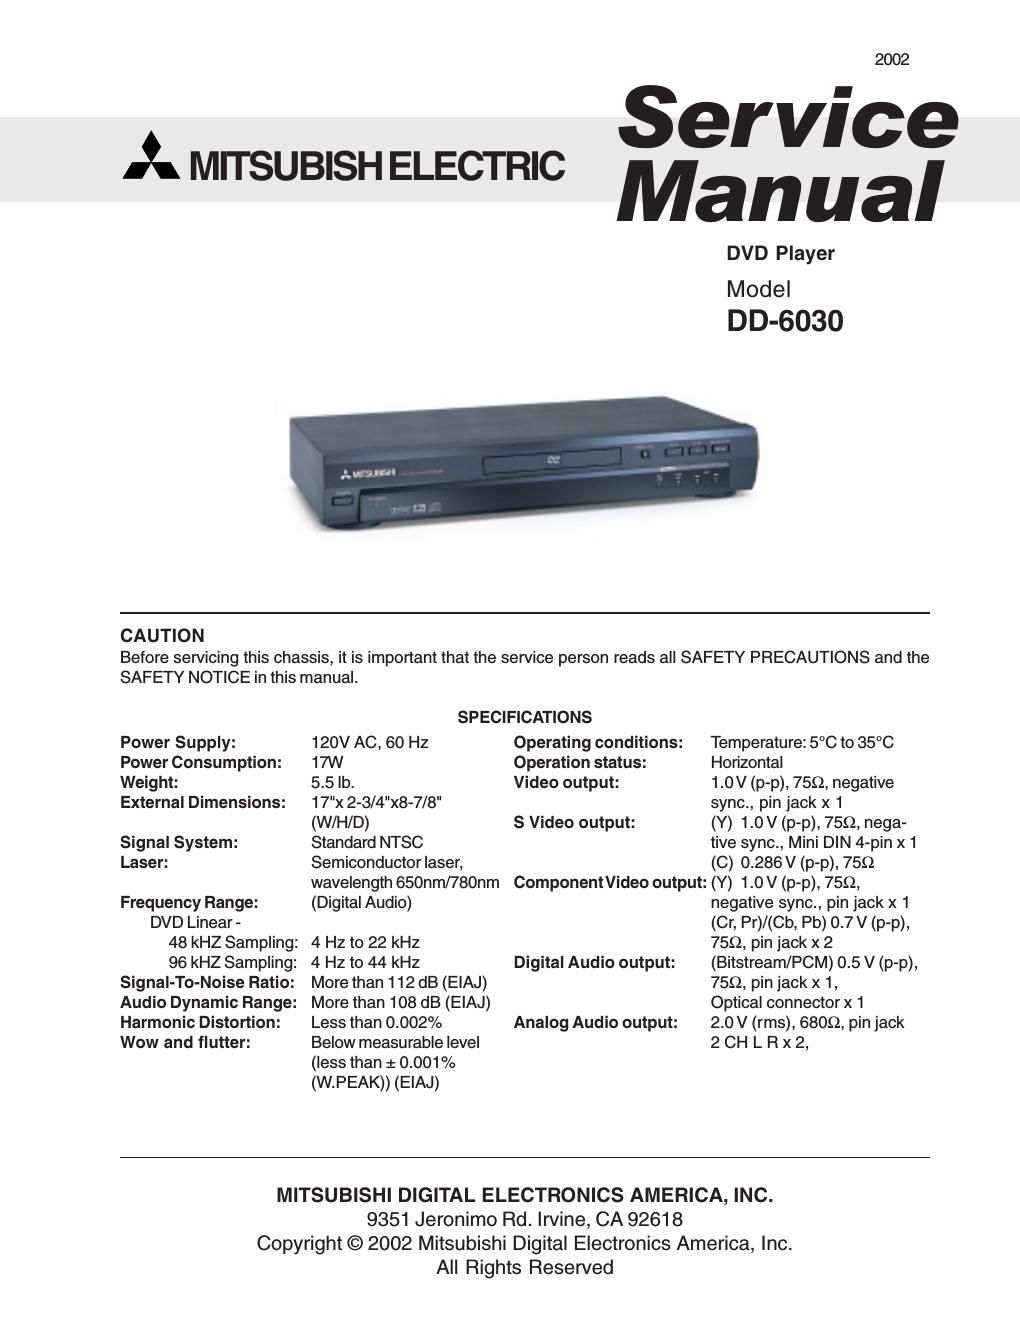 mitsubishi dd 6030 service manual